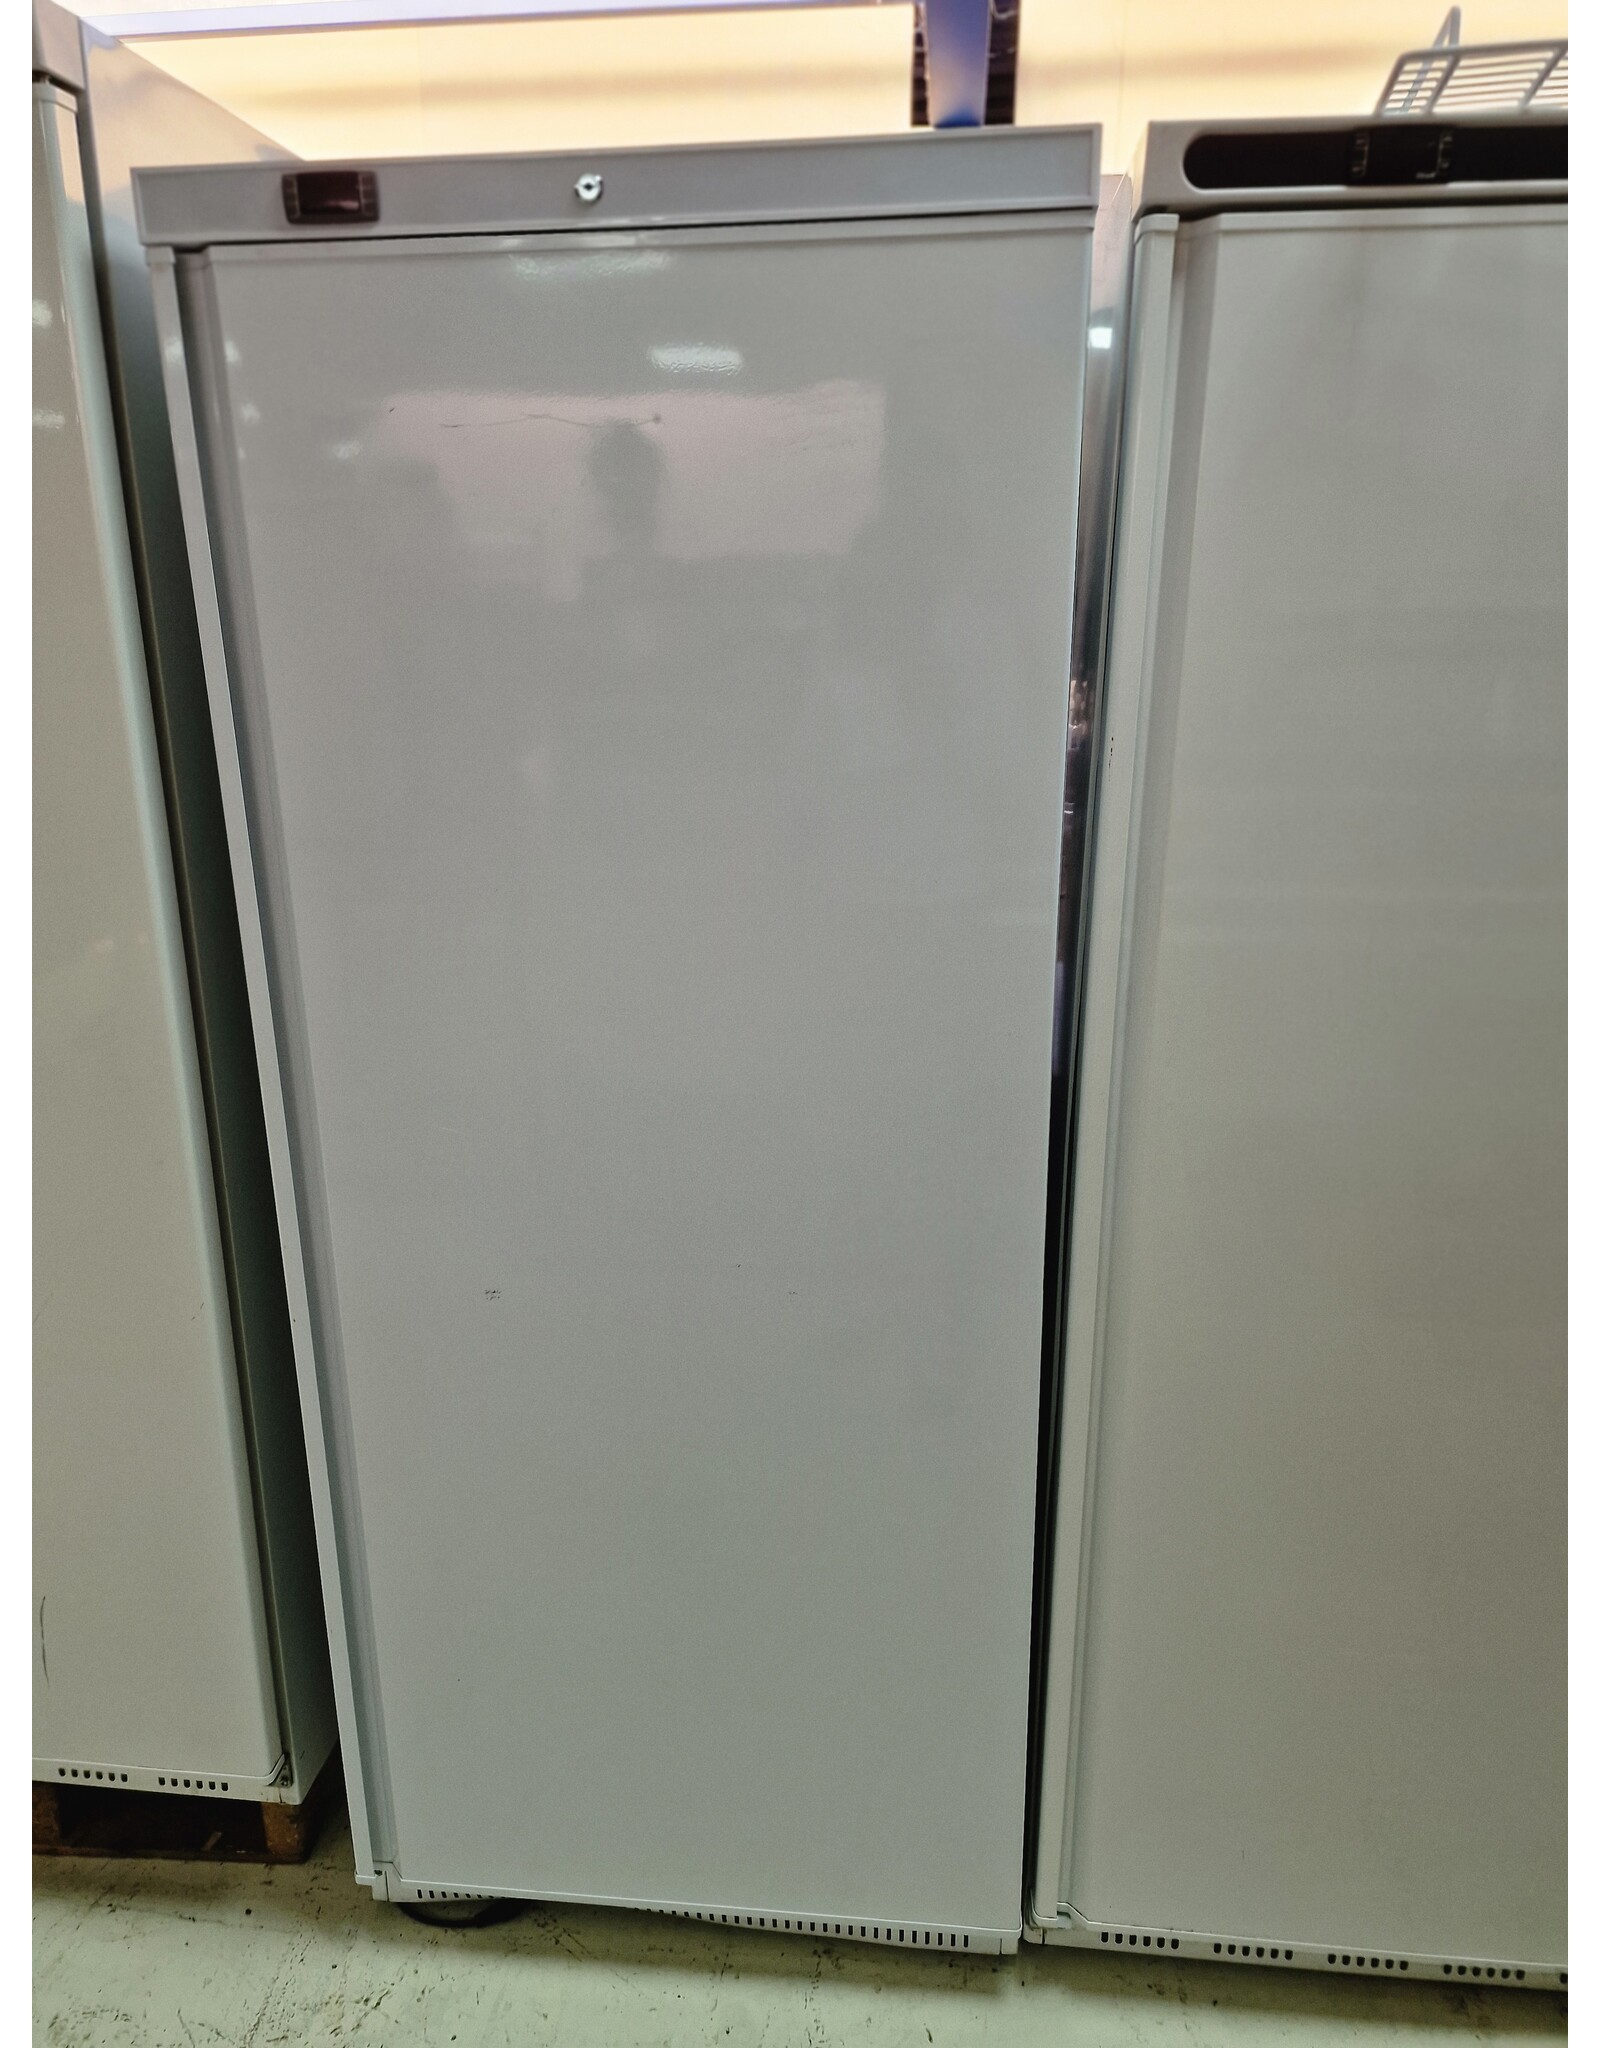 Horeca koelkast 600L QR600